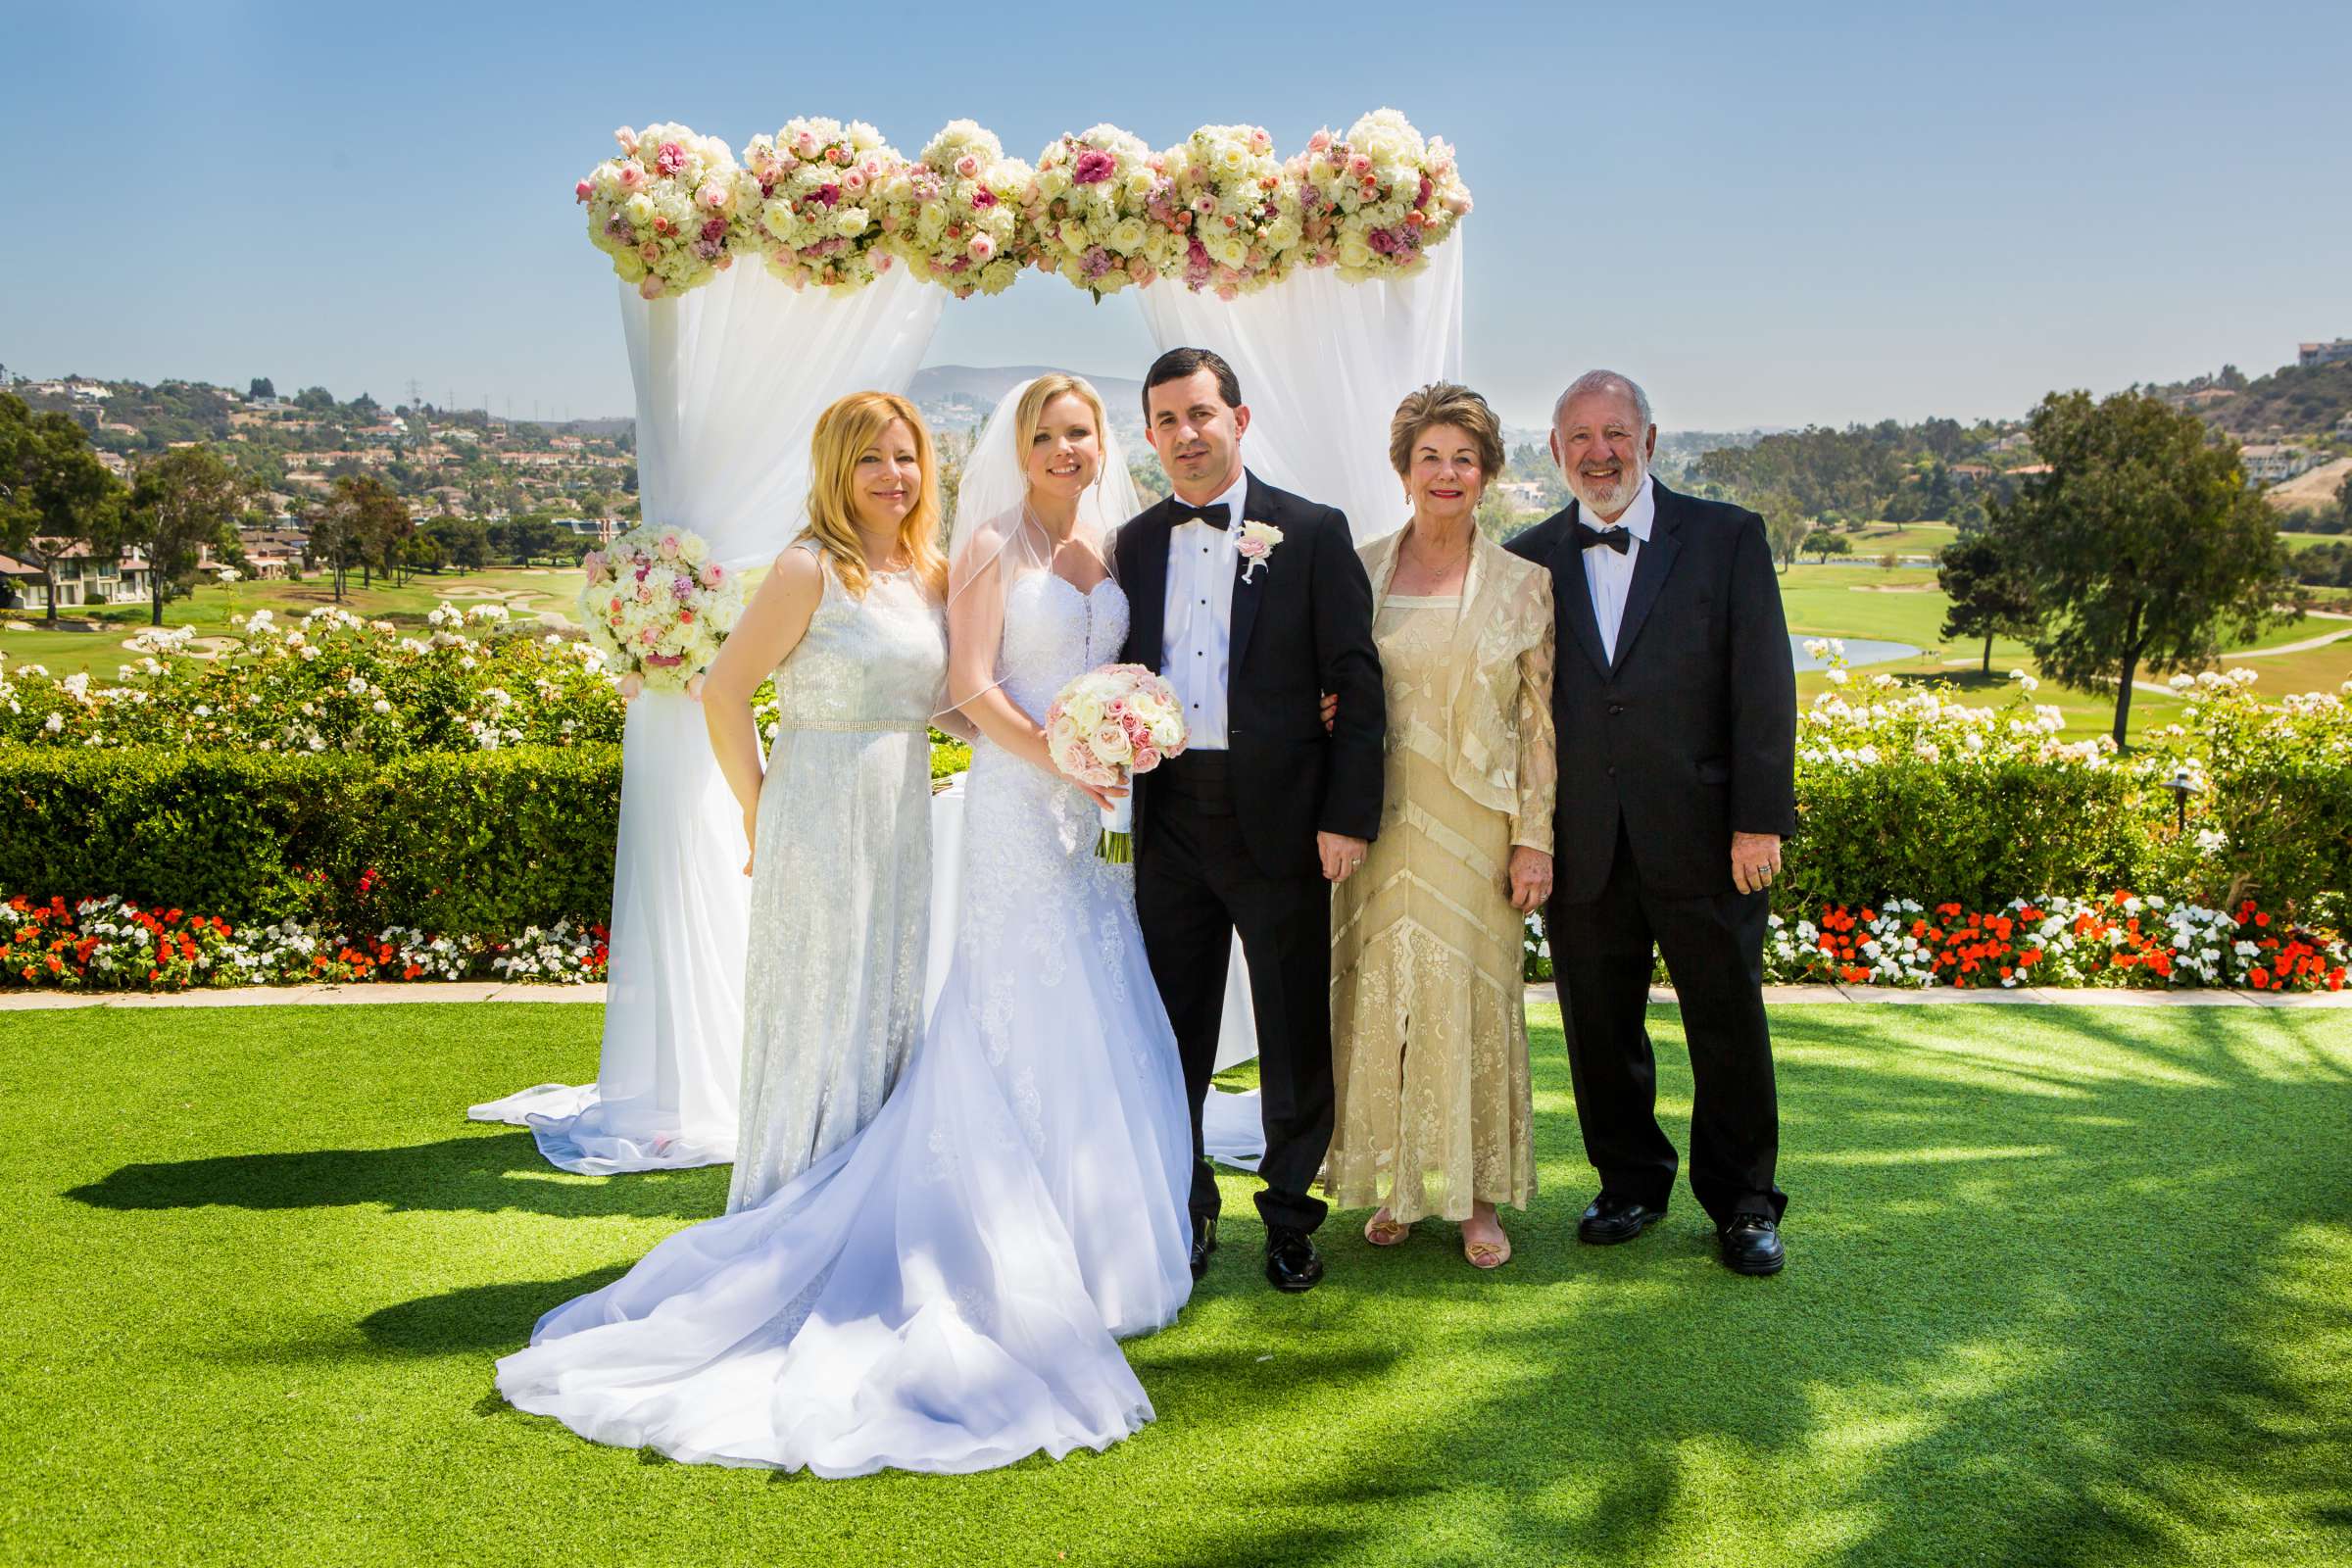 Omni La Costa Resort & Spa Wedding coordinated by Elements of Style, Irina and Brett Wedding Photo #56 by True Photography